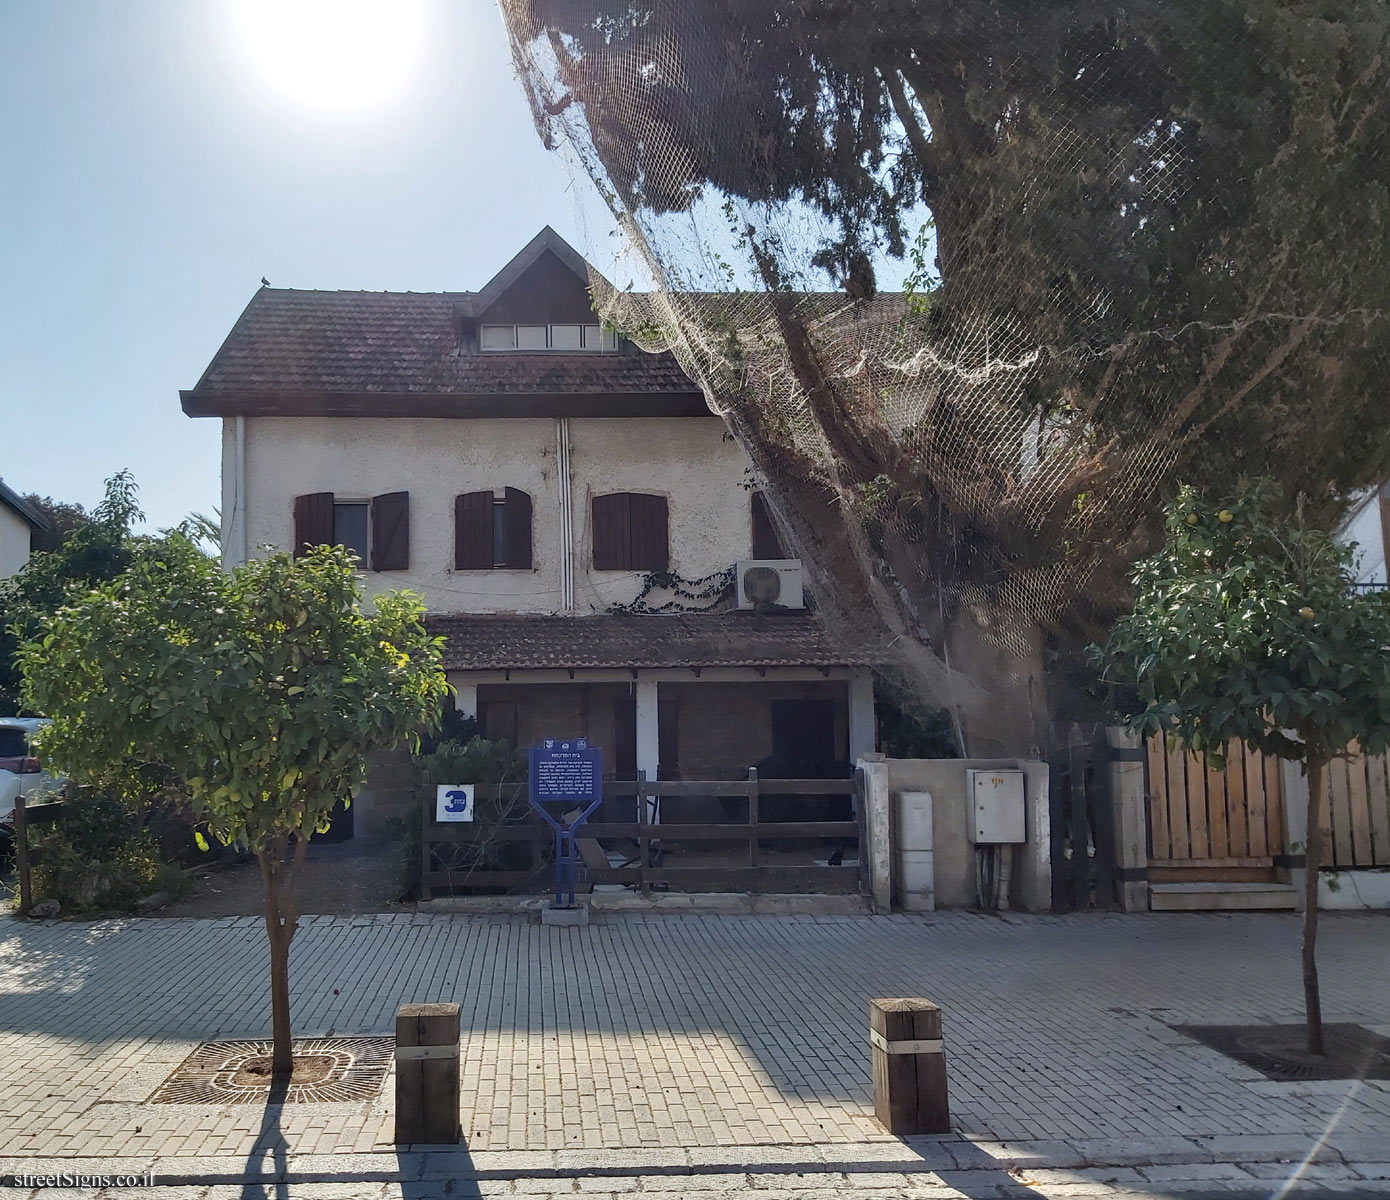 Heritage Sites in Israel - The Pharmacy - Sderot Rothschild 50, Mazkeret Batya, Israel